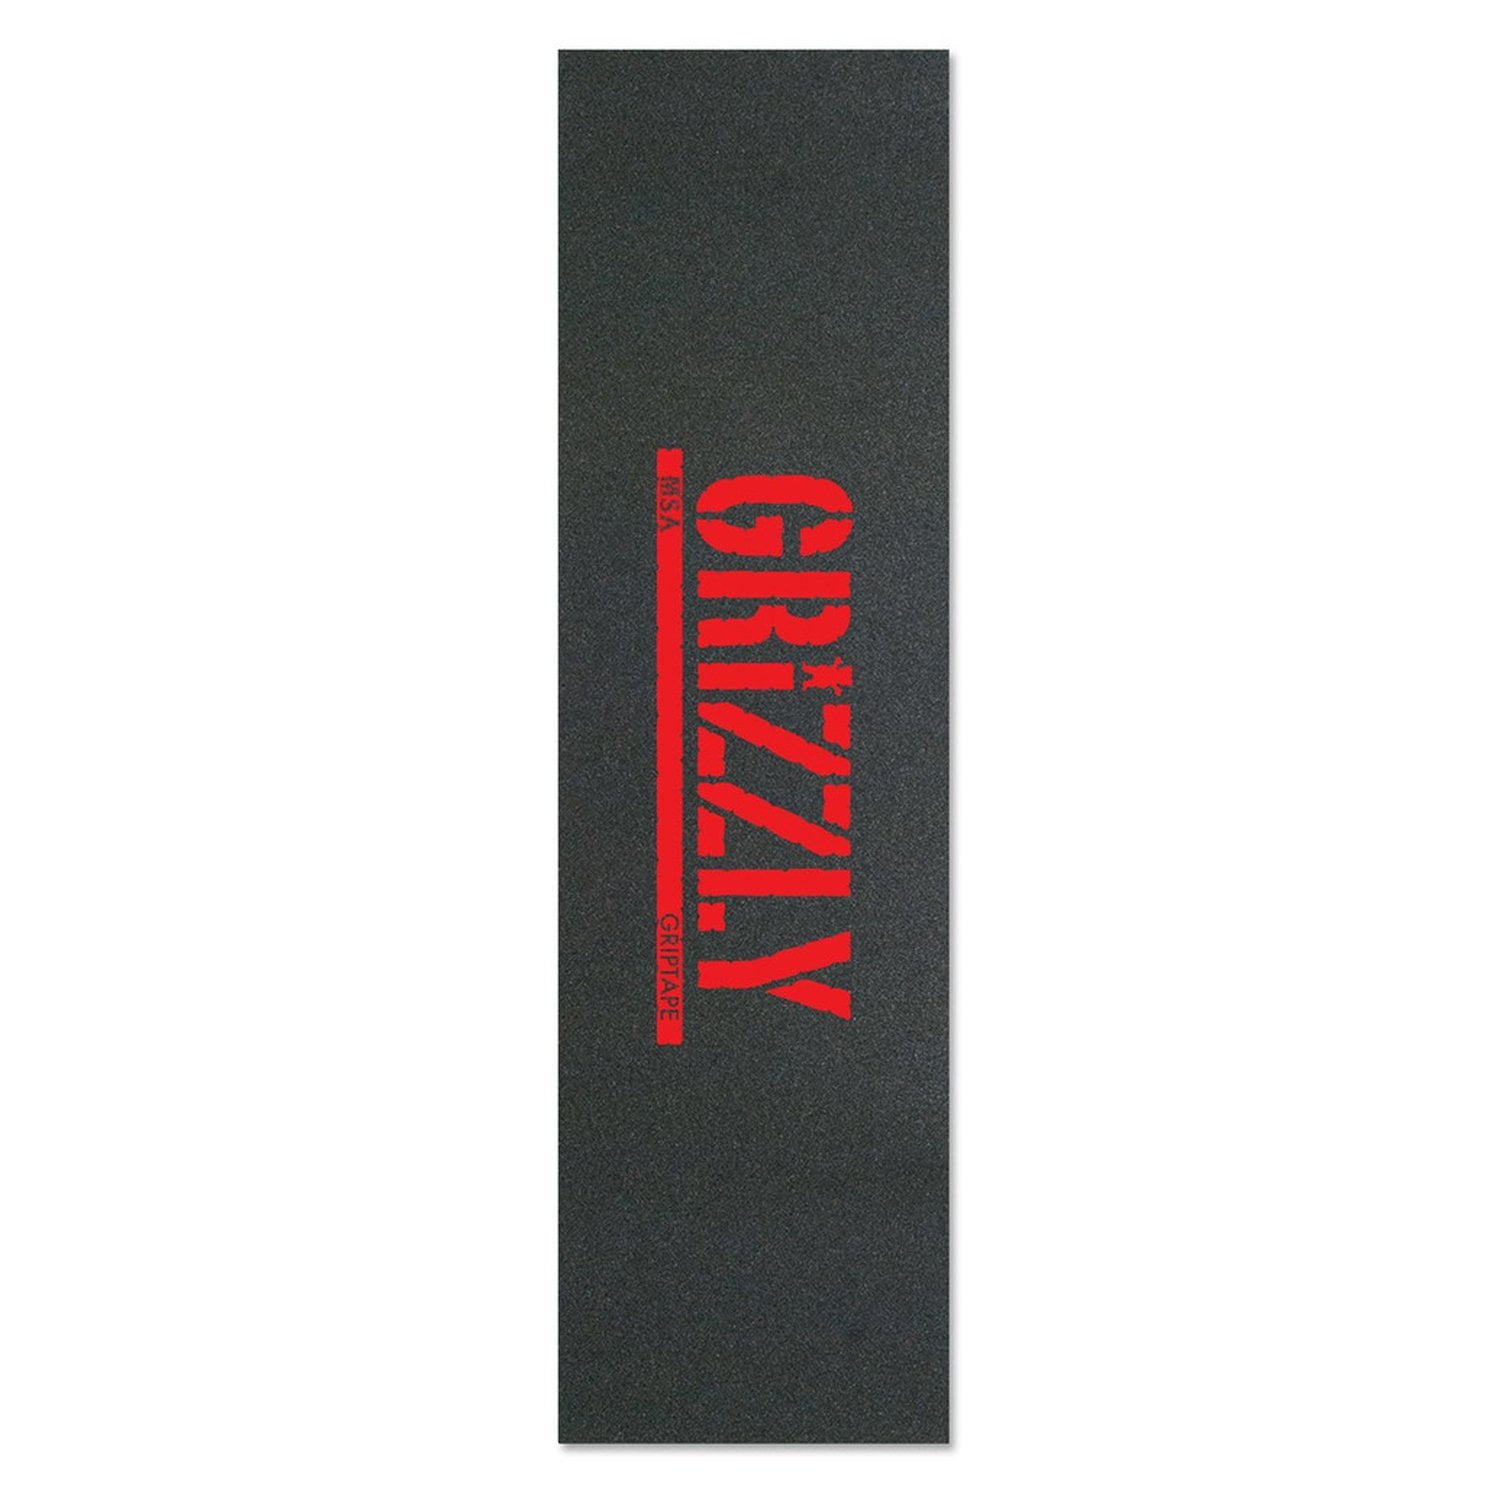 Grizzly Power Flower Single Sheet Griptape 9"x33" Mint 